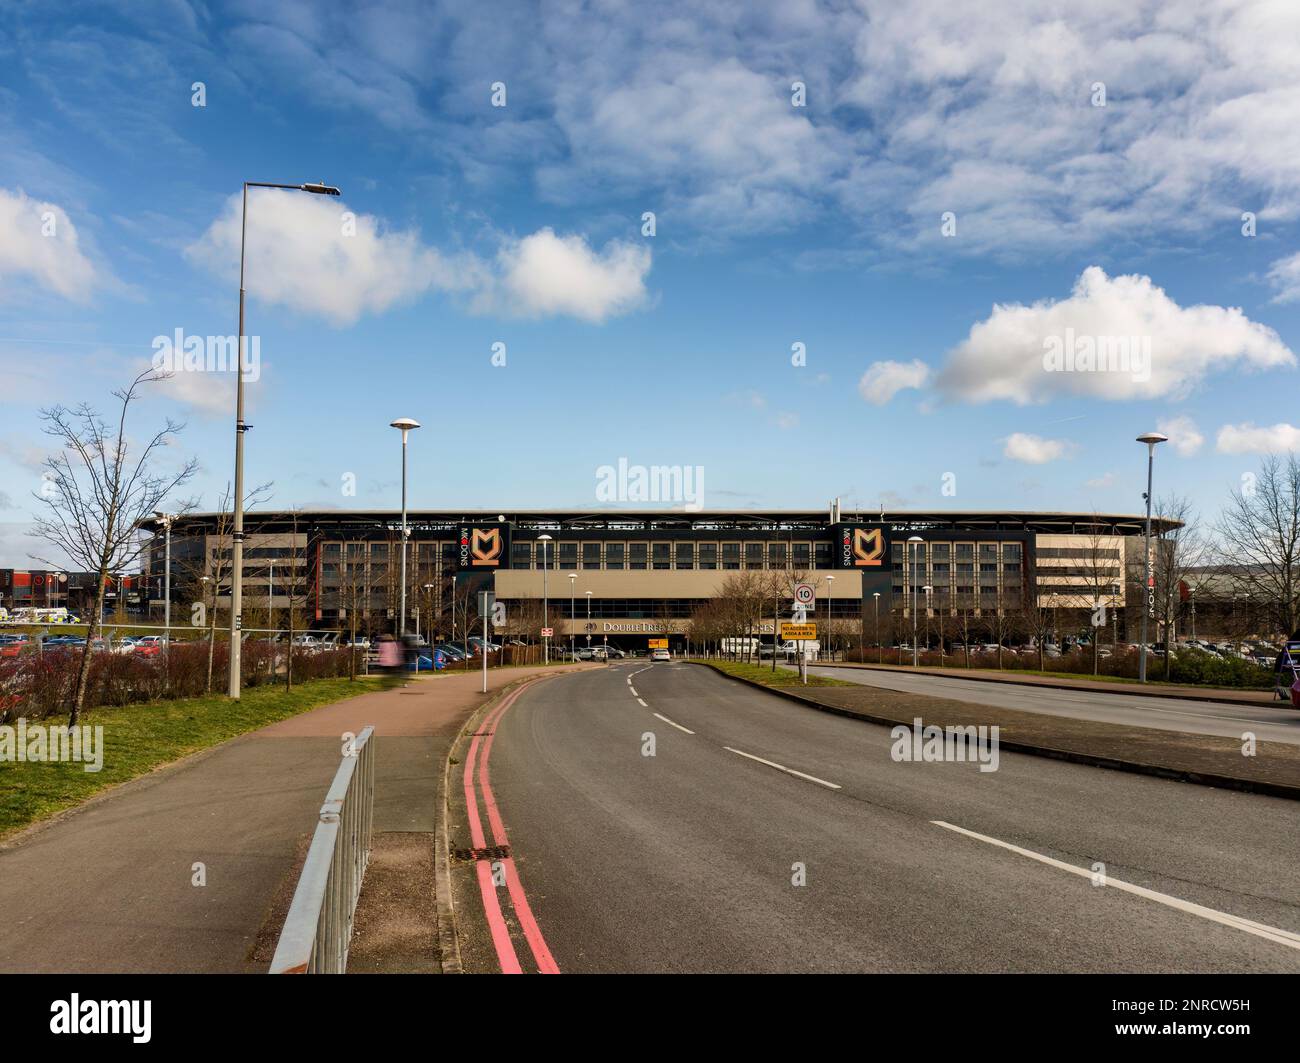 Stadium MK in Milton Keynes, Buckinghamshire, UK Stock Photo